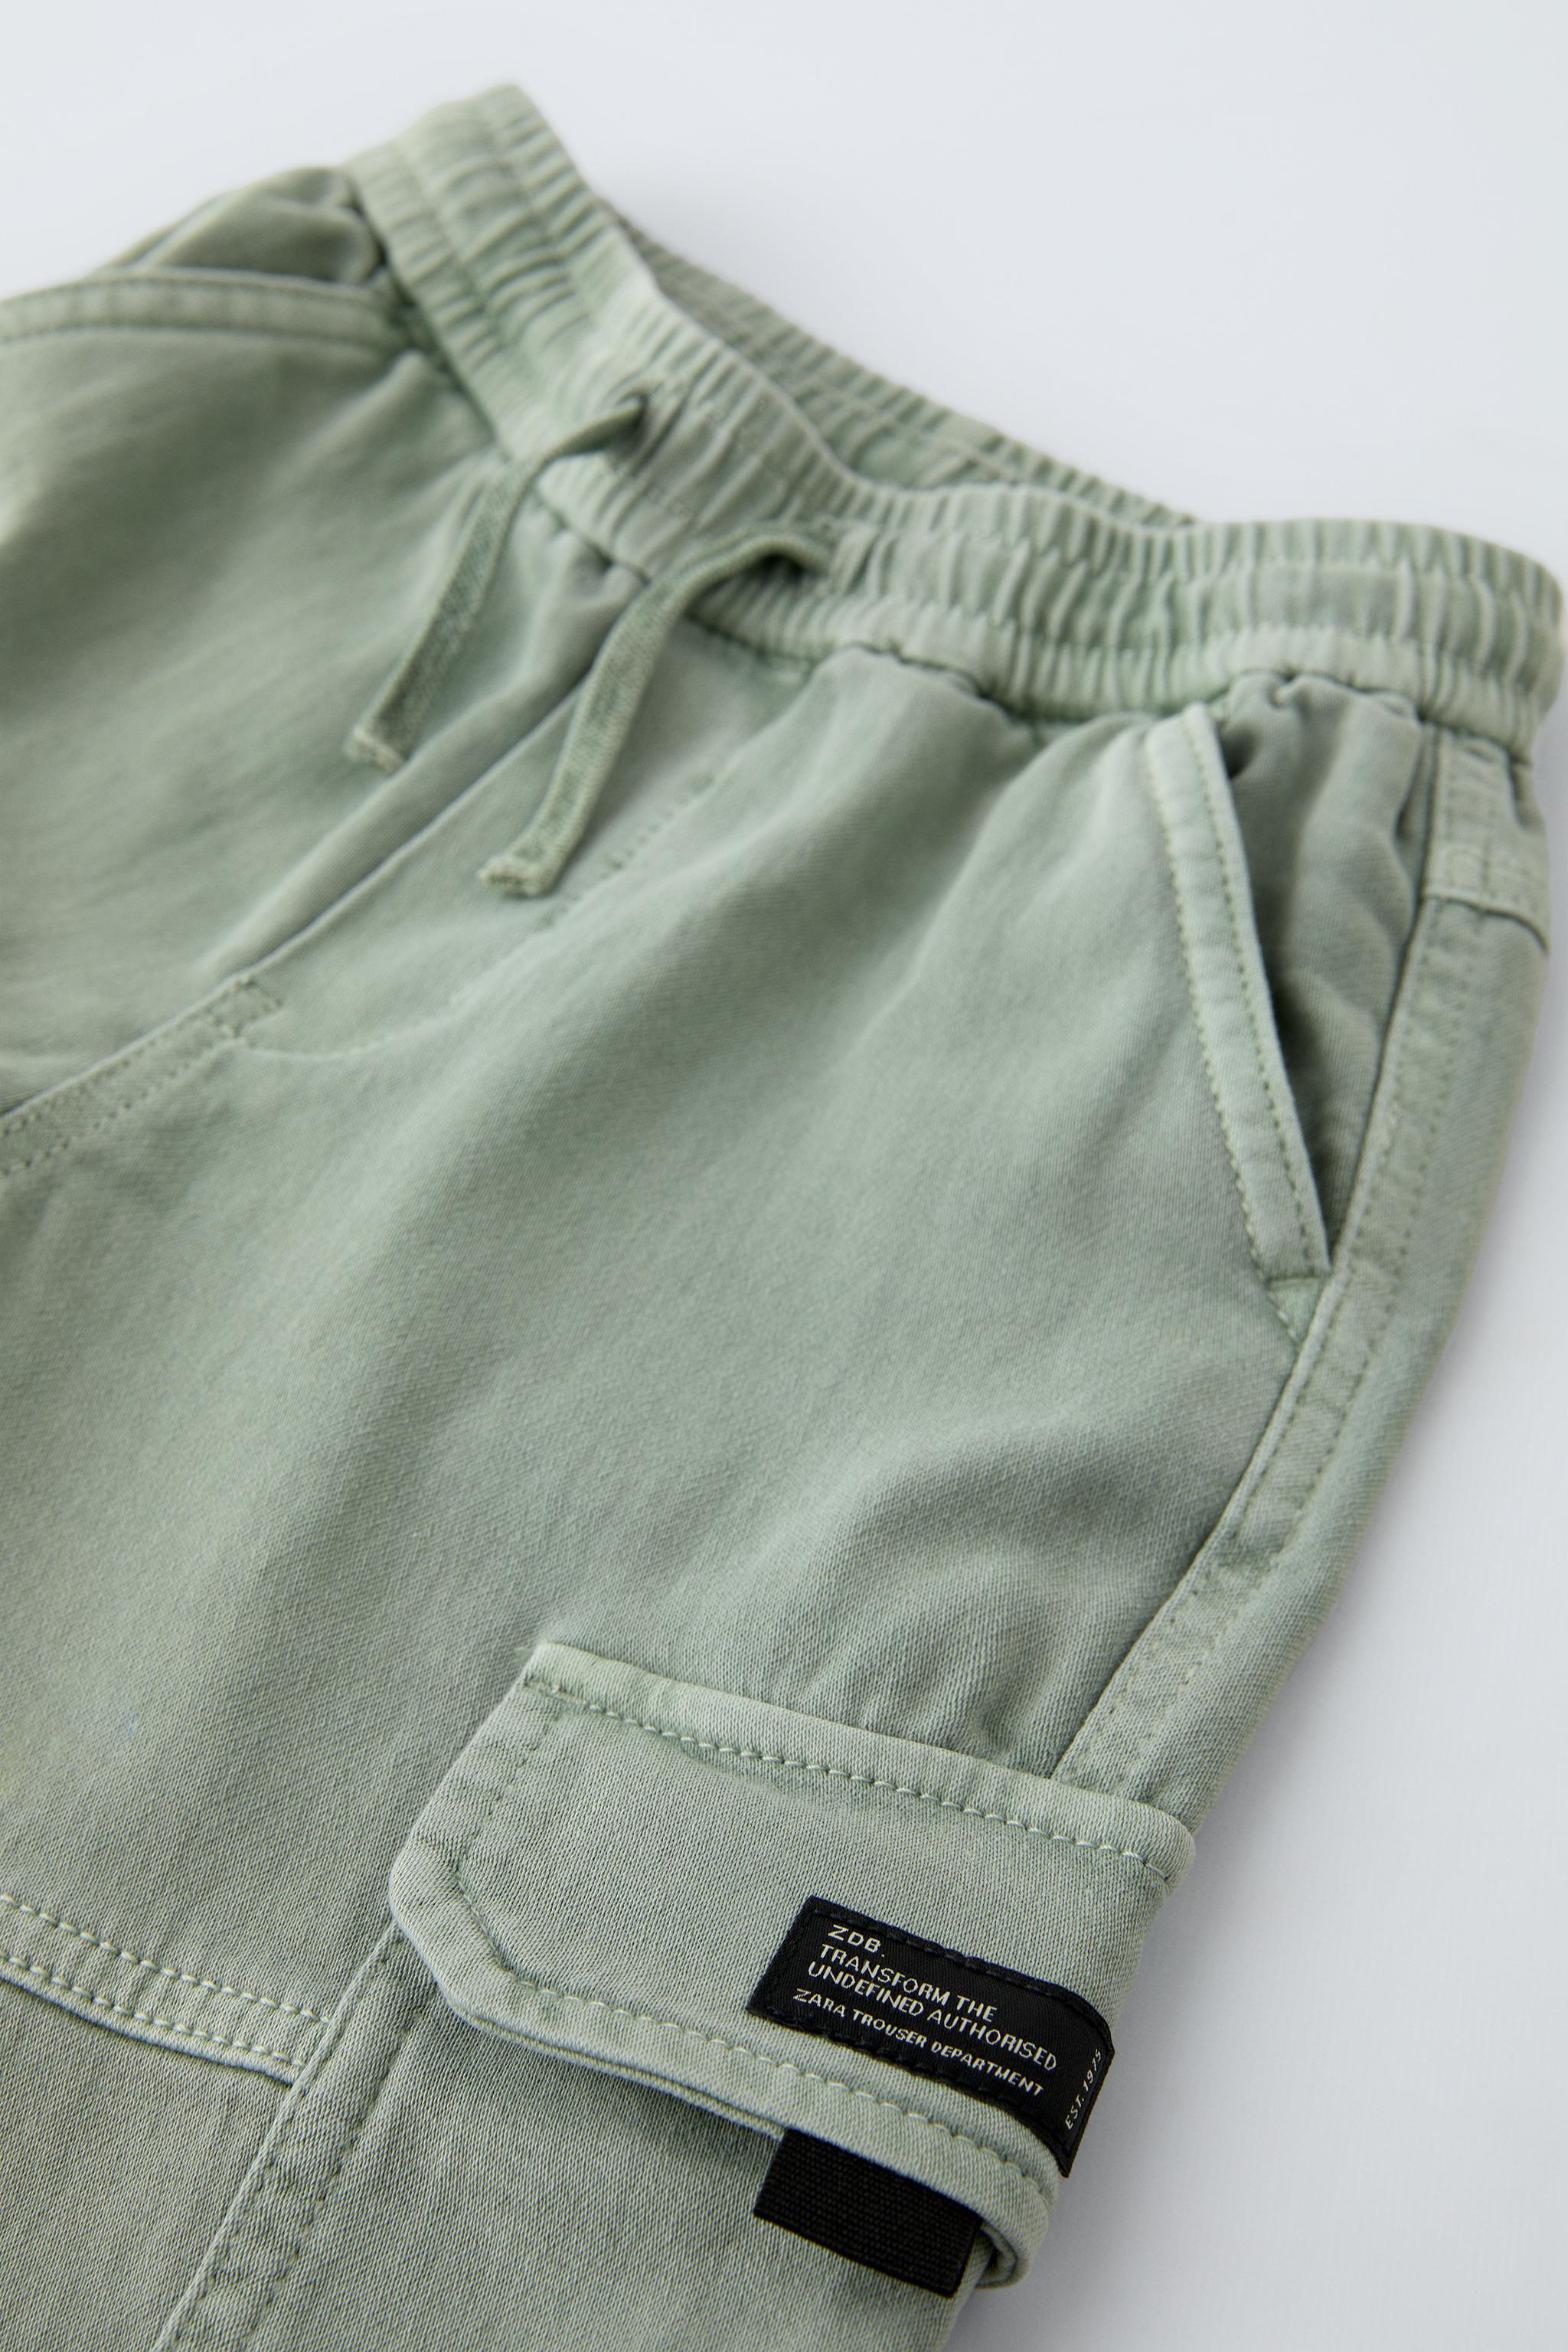 Zara Inspired Trouser Pants w/ Pockets, Woven SMALL-2XL